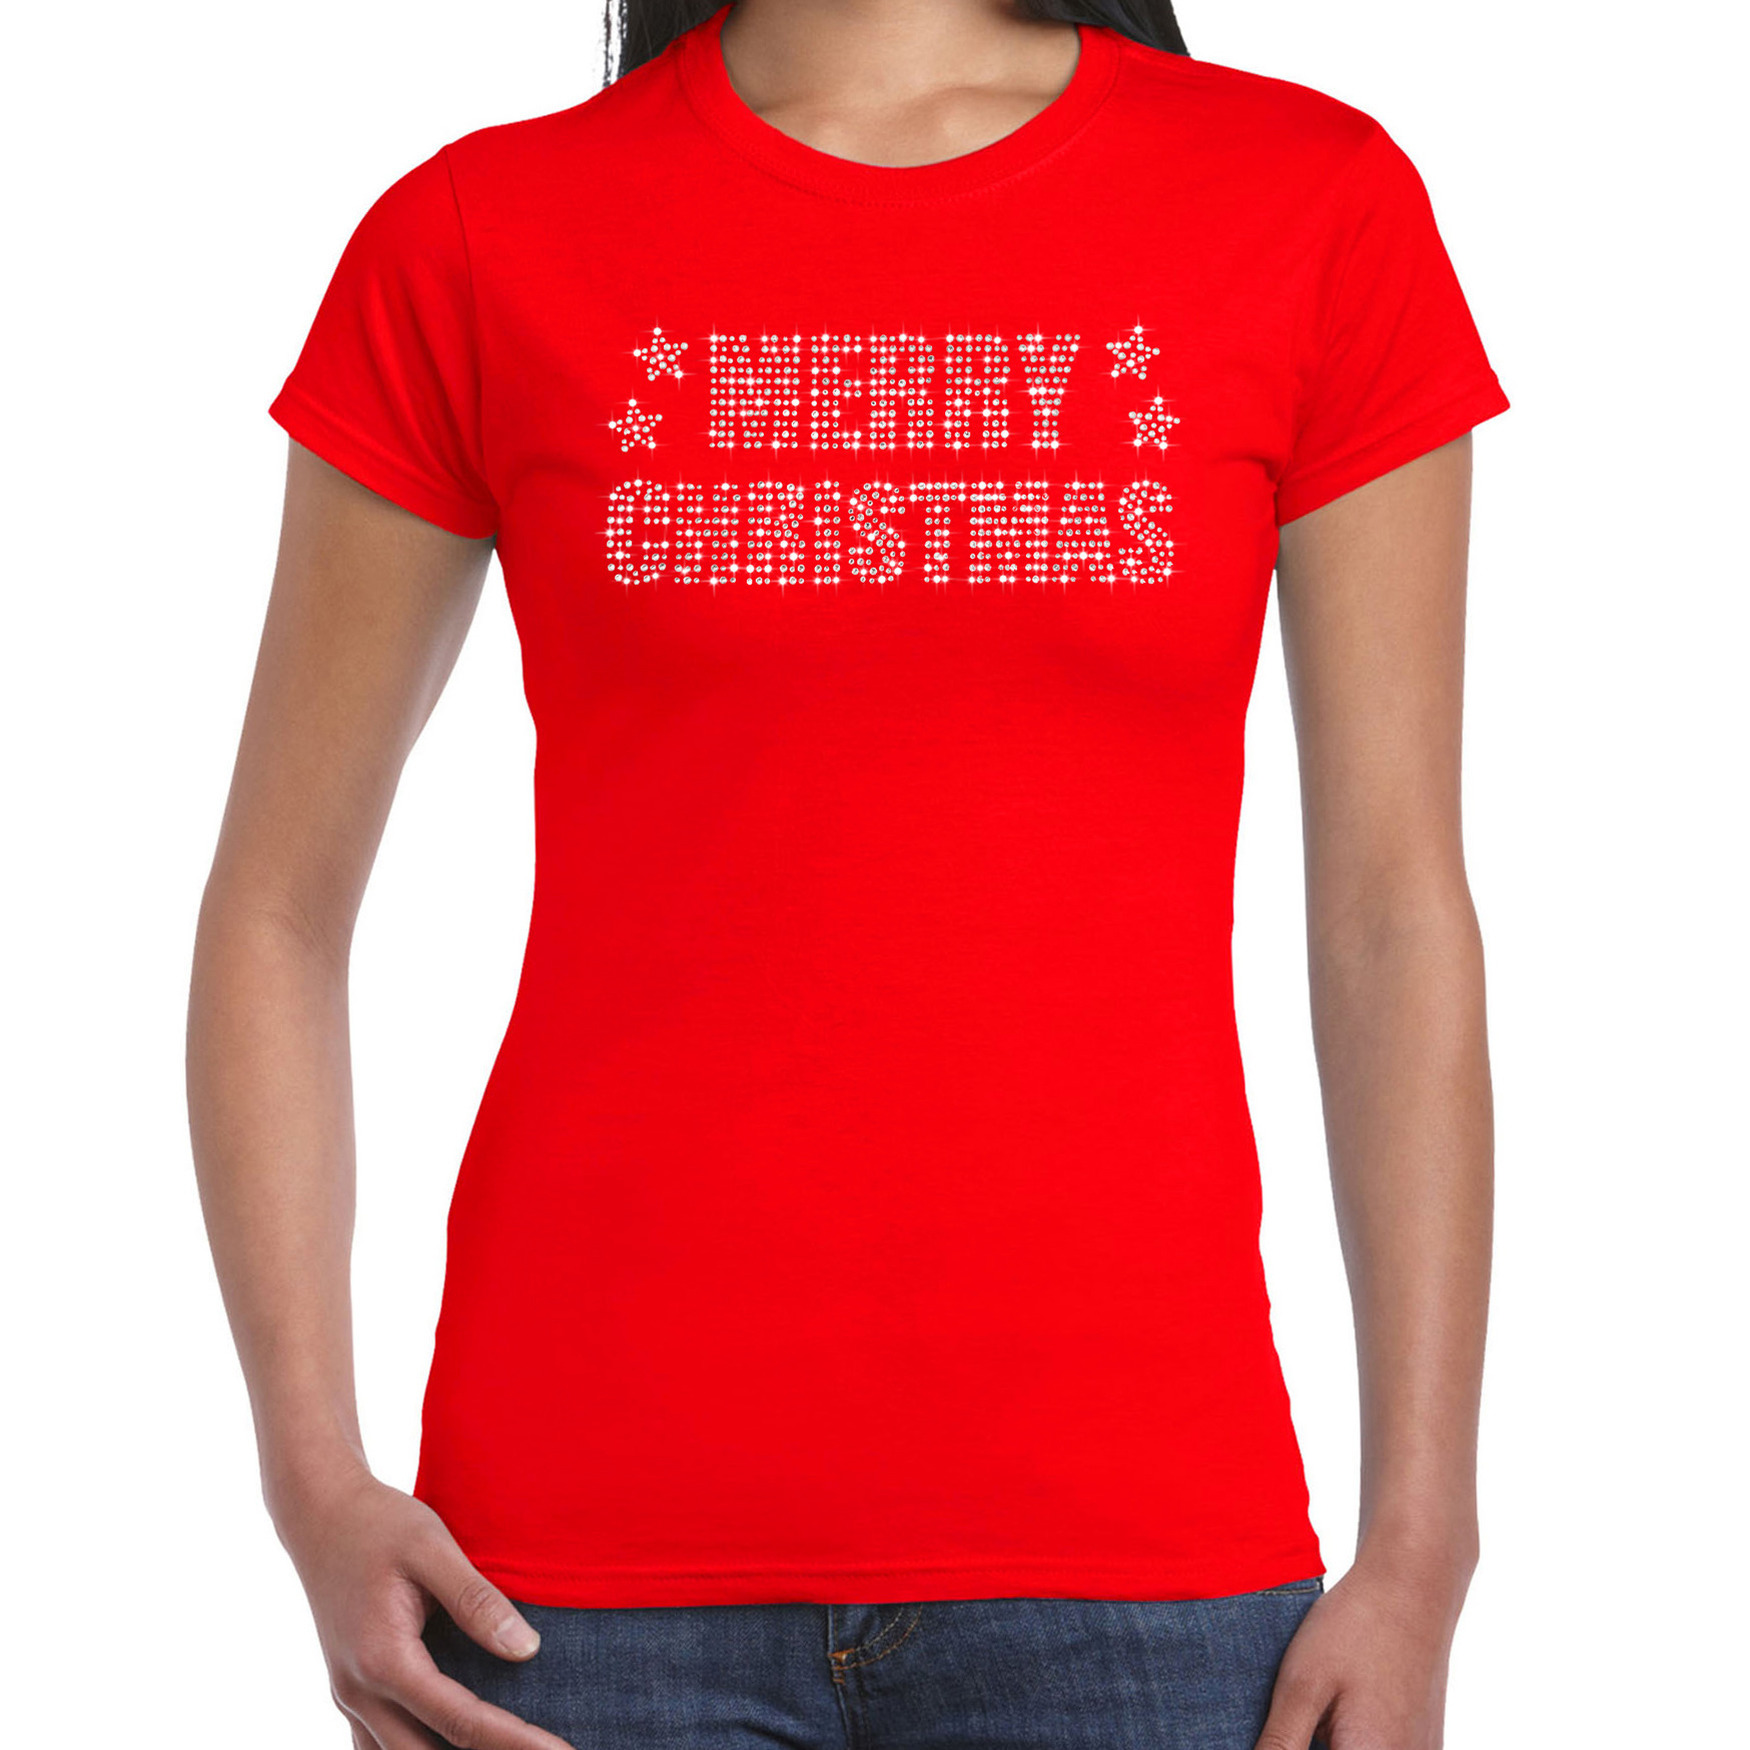 Glitter kerst t-shirt rood Merry Christmas glitter steentjes voor dames - Glitter kerst shirt